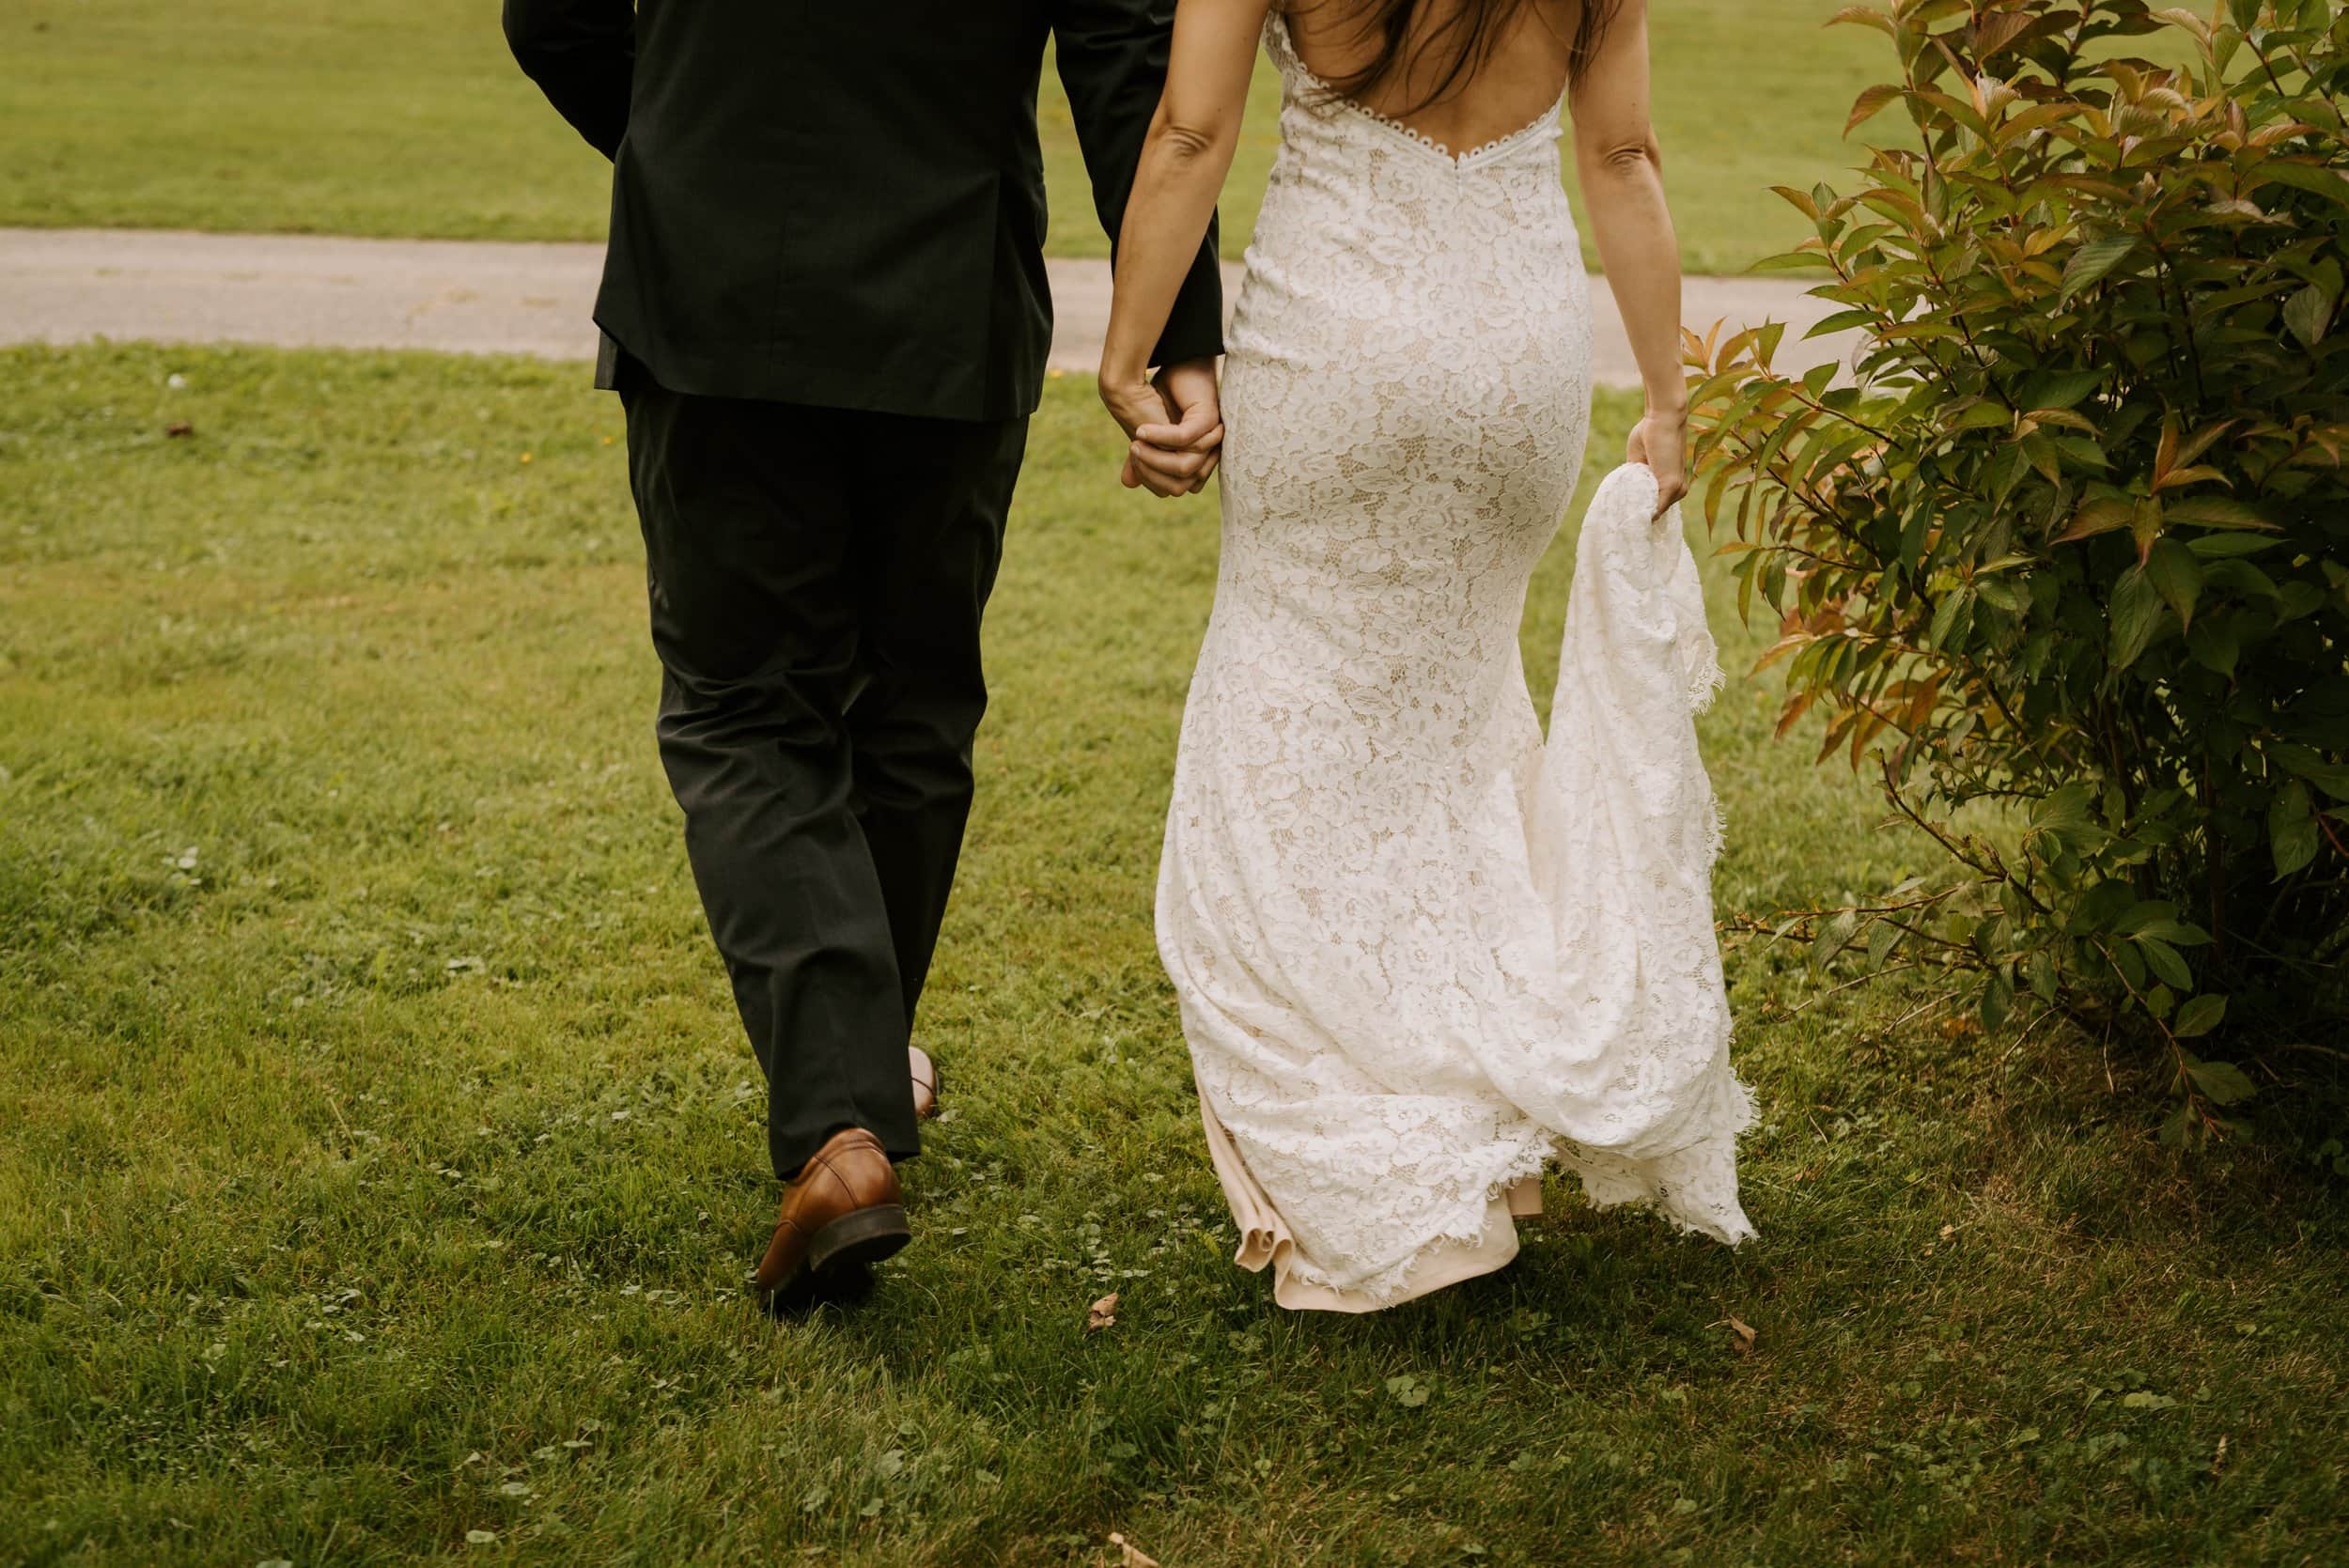 Wedding photographer in PEI - Michaela Bell Photography